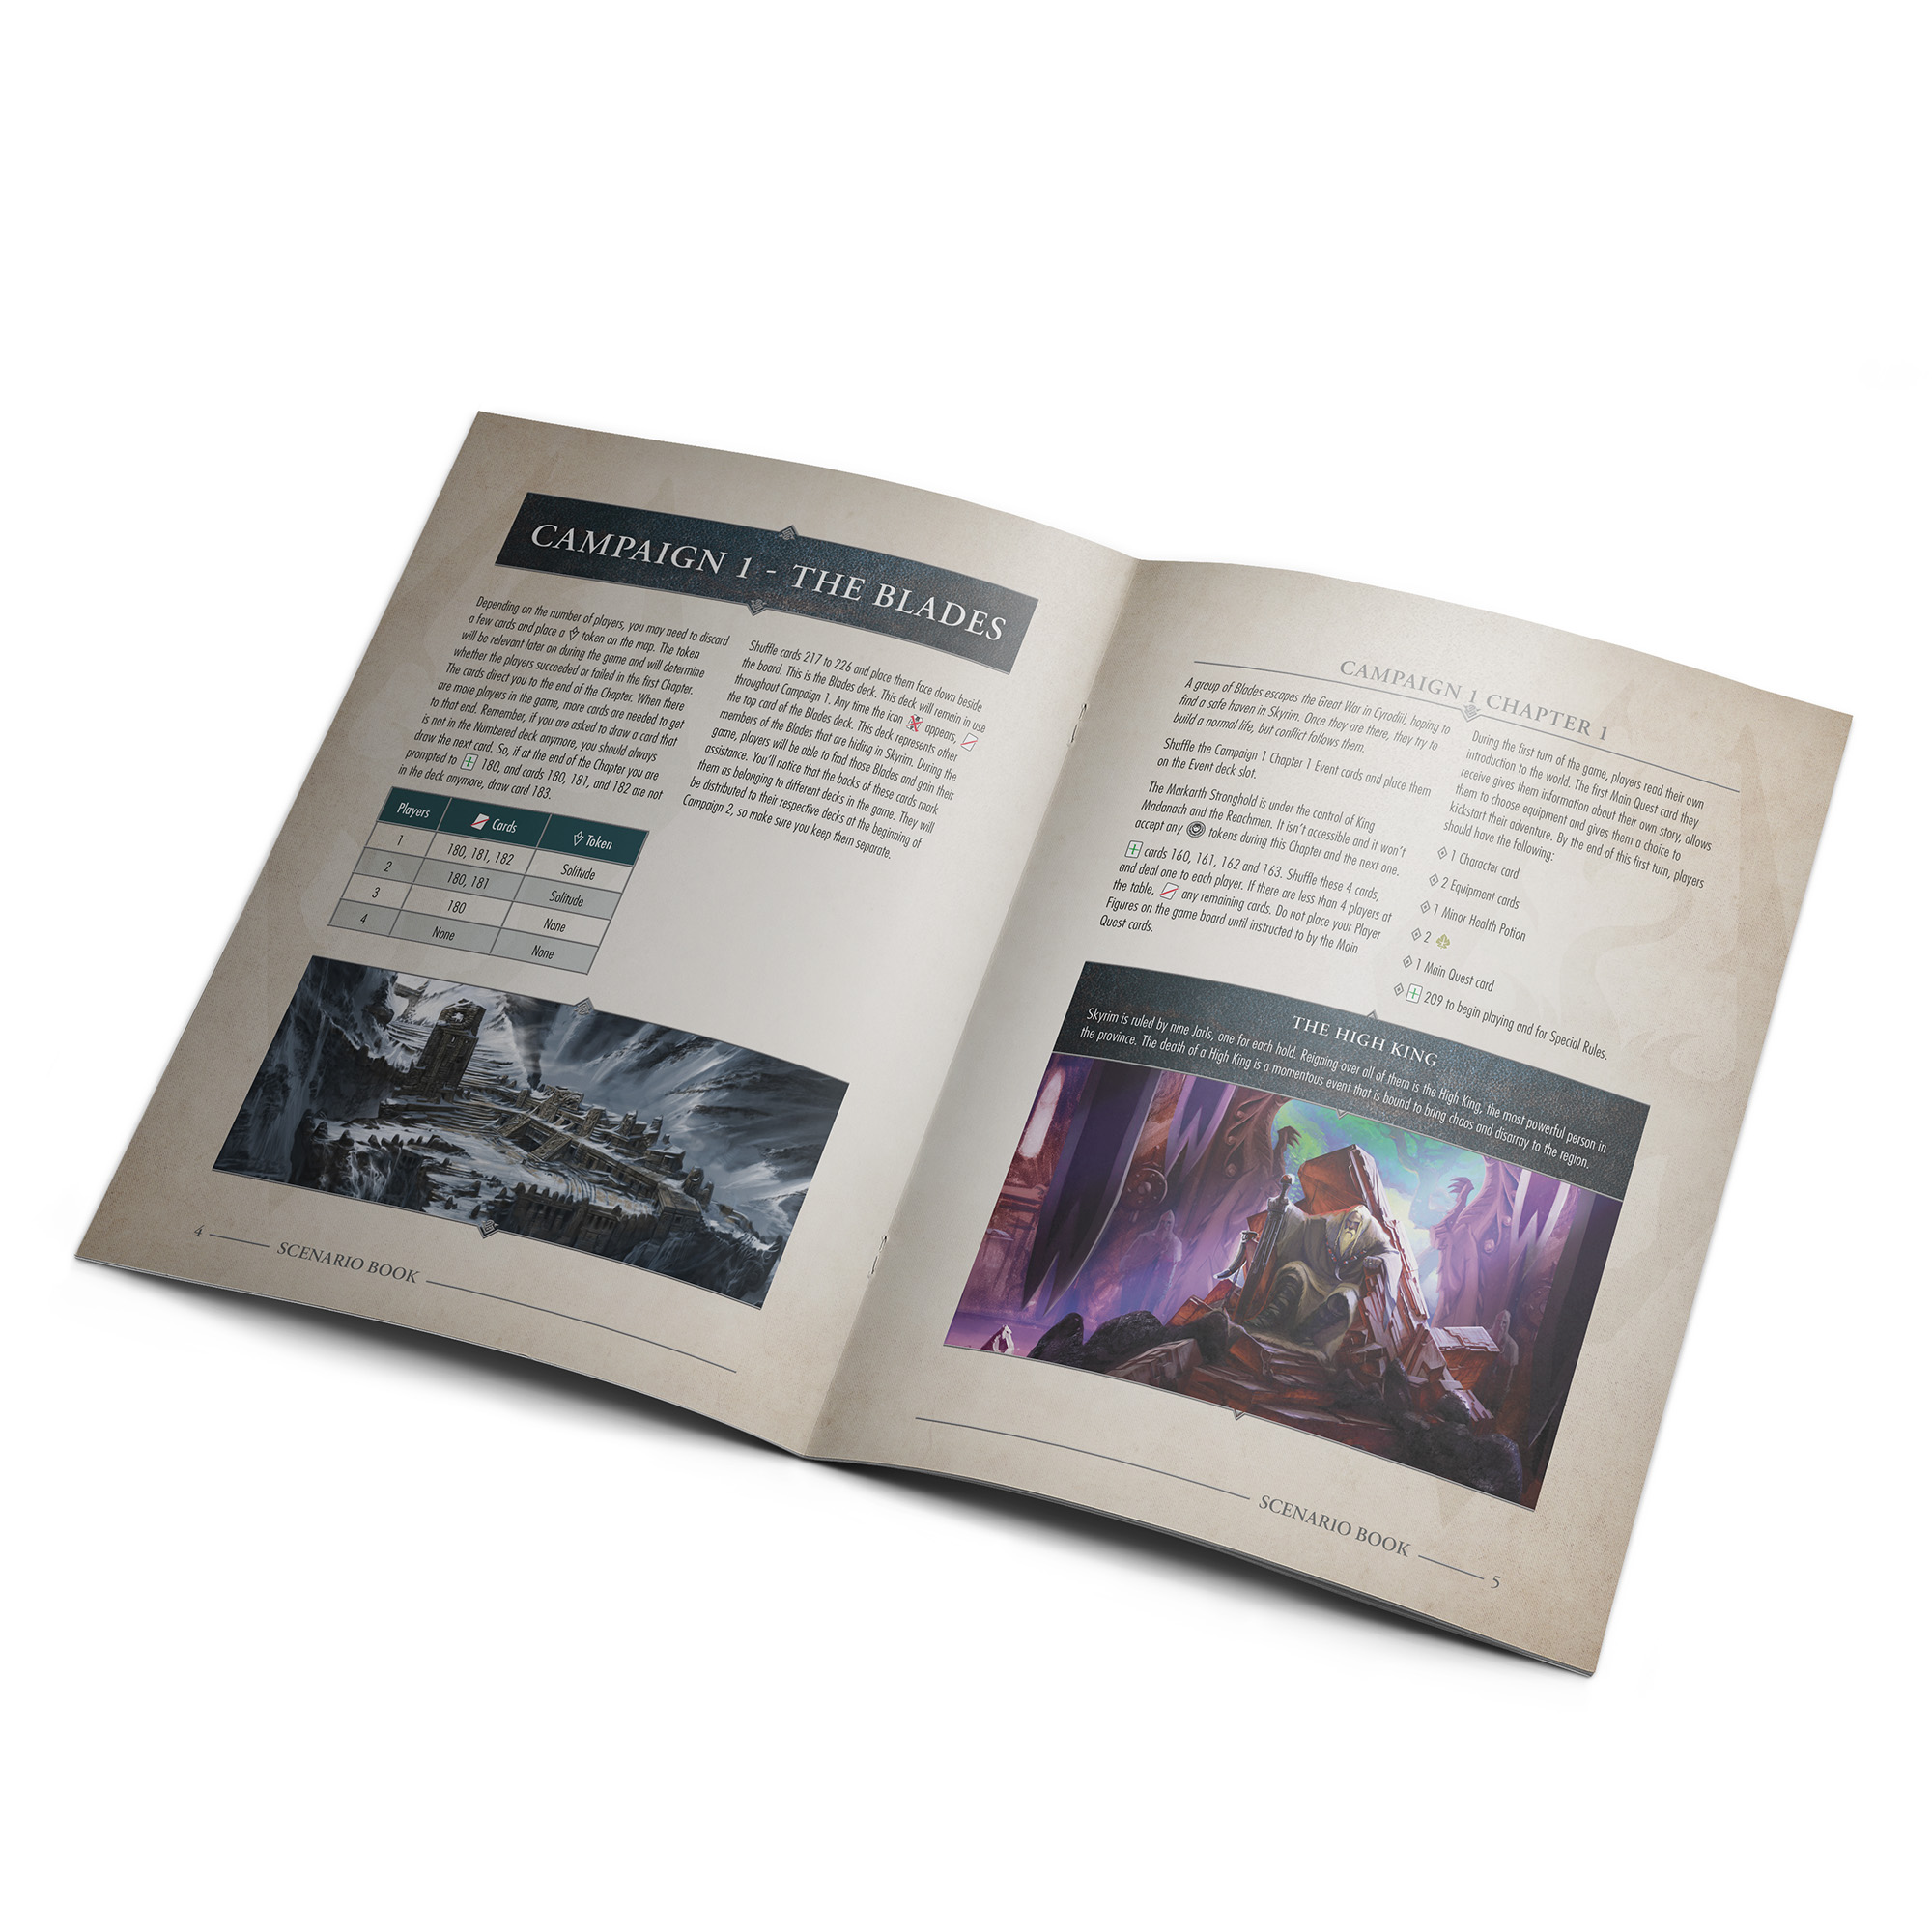 The Elder Scrolls V: Skyrim – The Adventure Game: campaign one